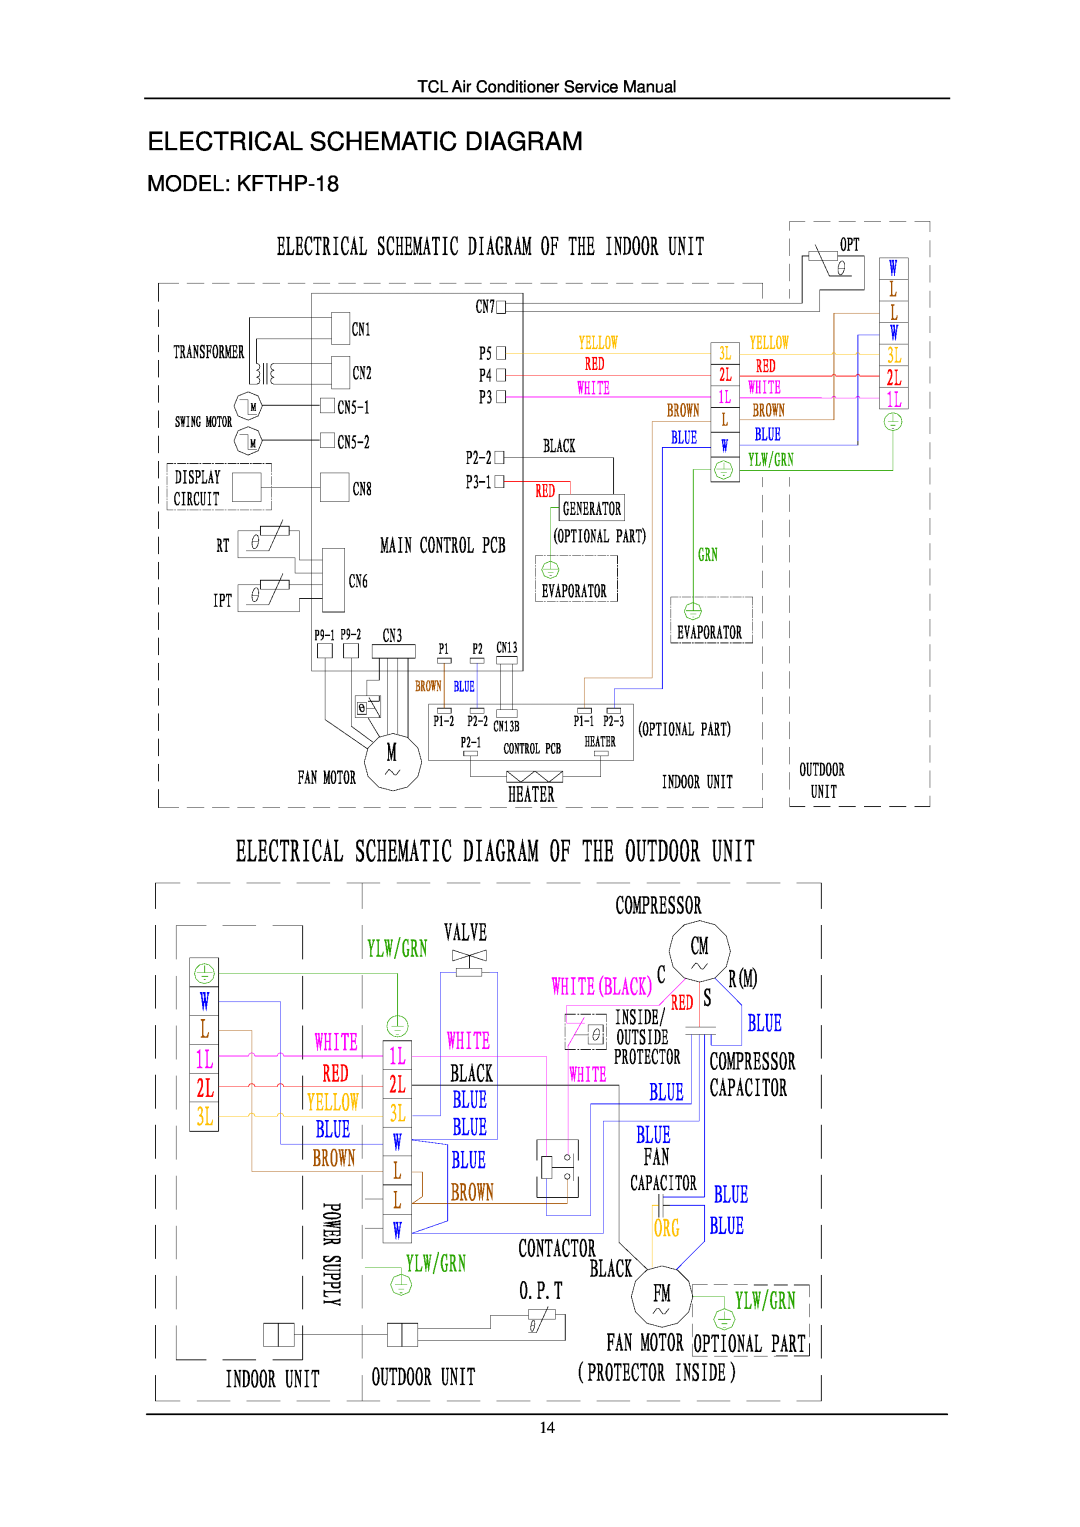 Soleus Air KFTHP-09, KFTHP-12, KFTHP-24 service manual Electrical Schematic Diagram, MODEL KFTHP-18 